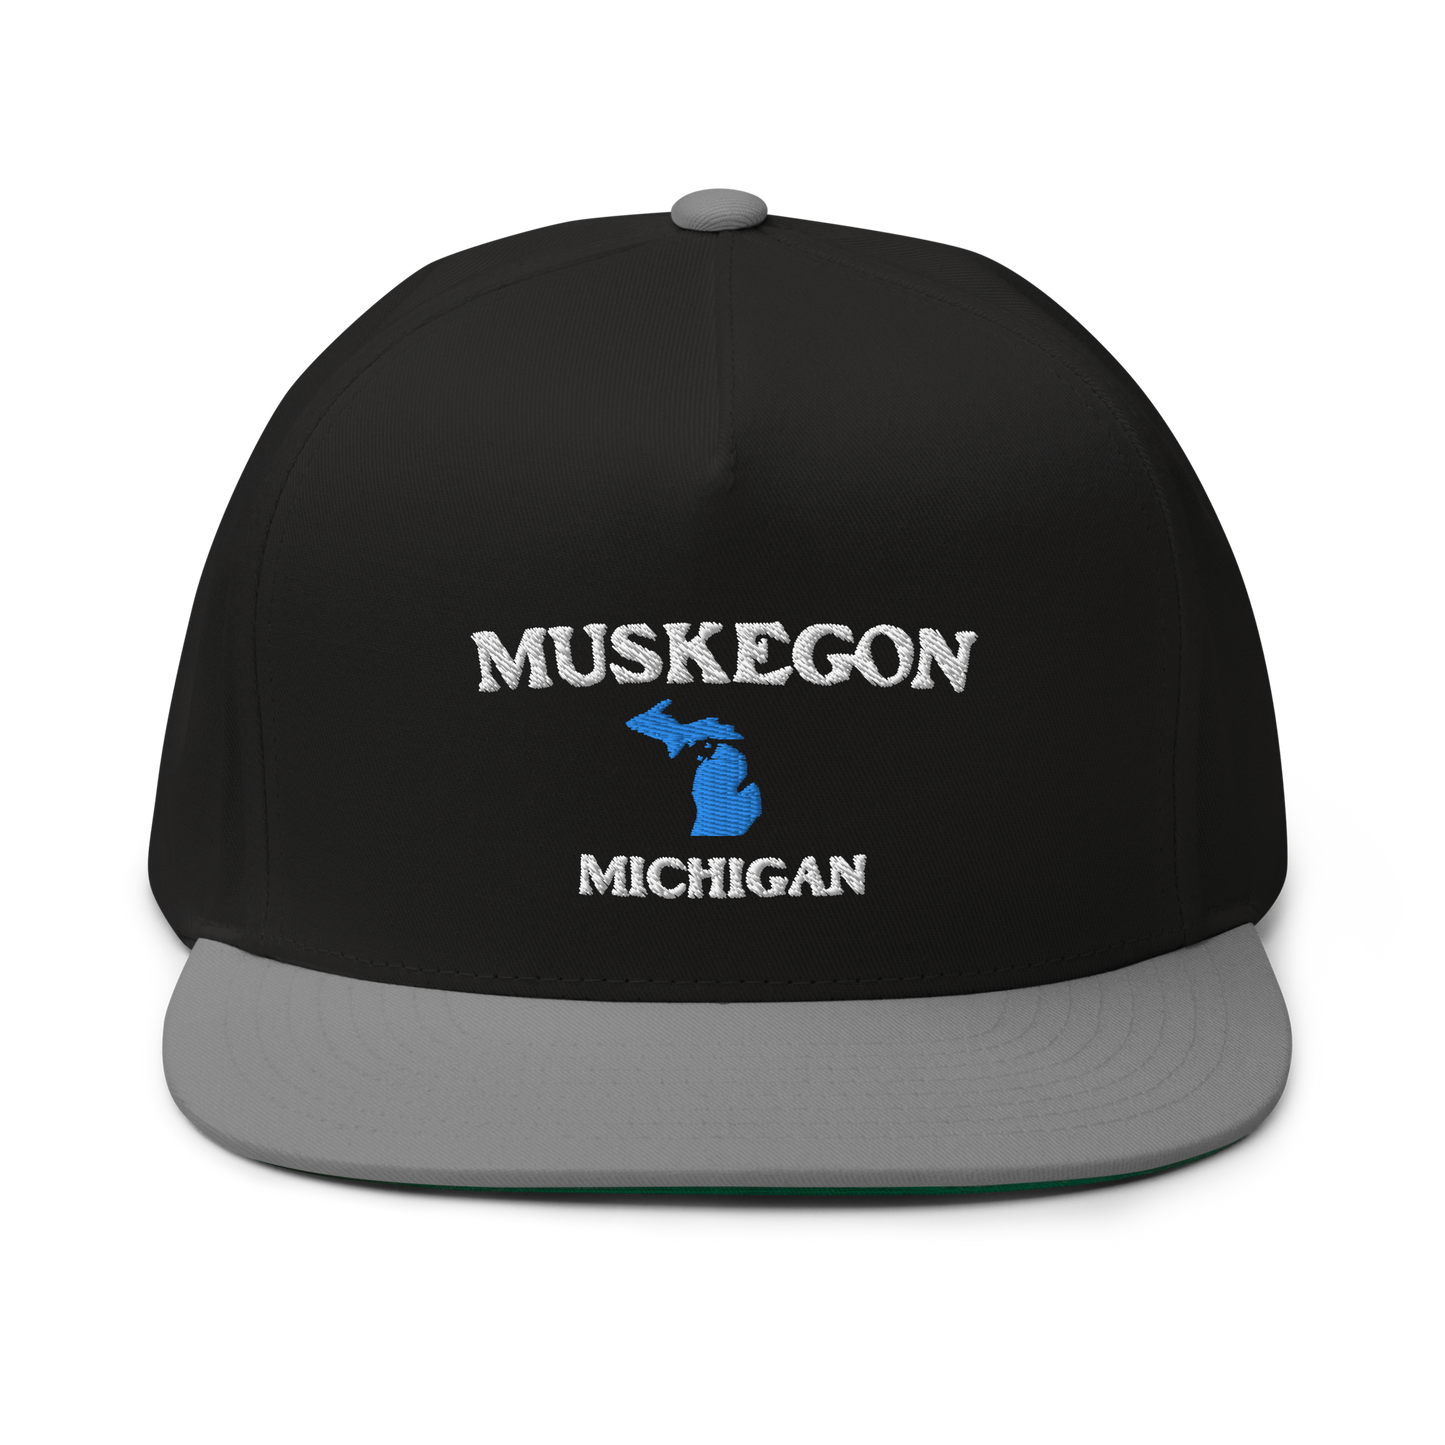 'Muskegon Michigan' Flat Bill Snapback (w/ Michigan Outline)